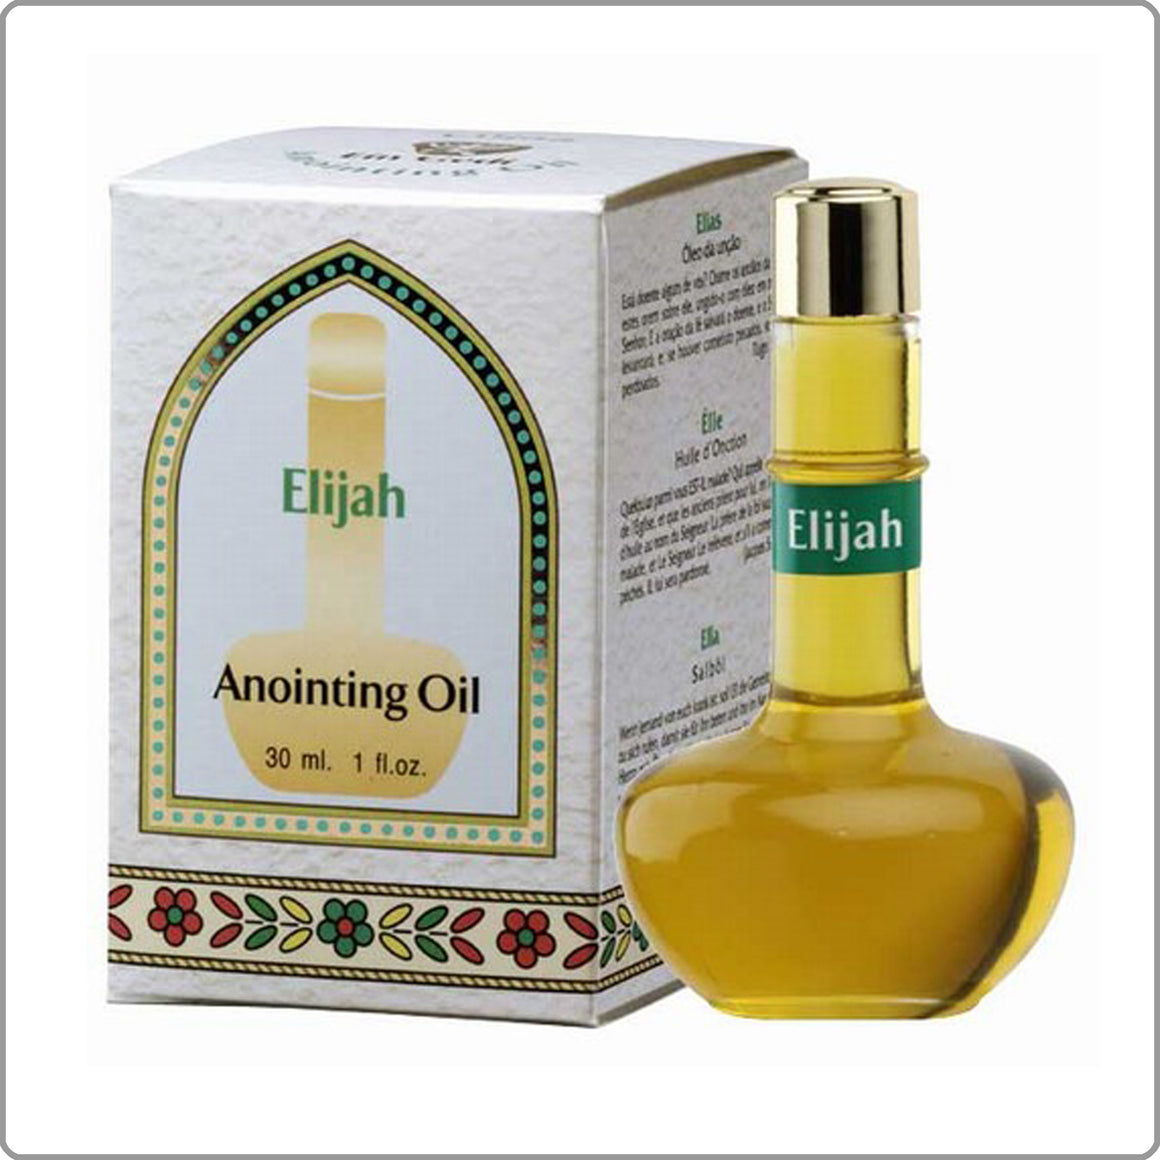 Elijah - Anointing Oil 30 ml.